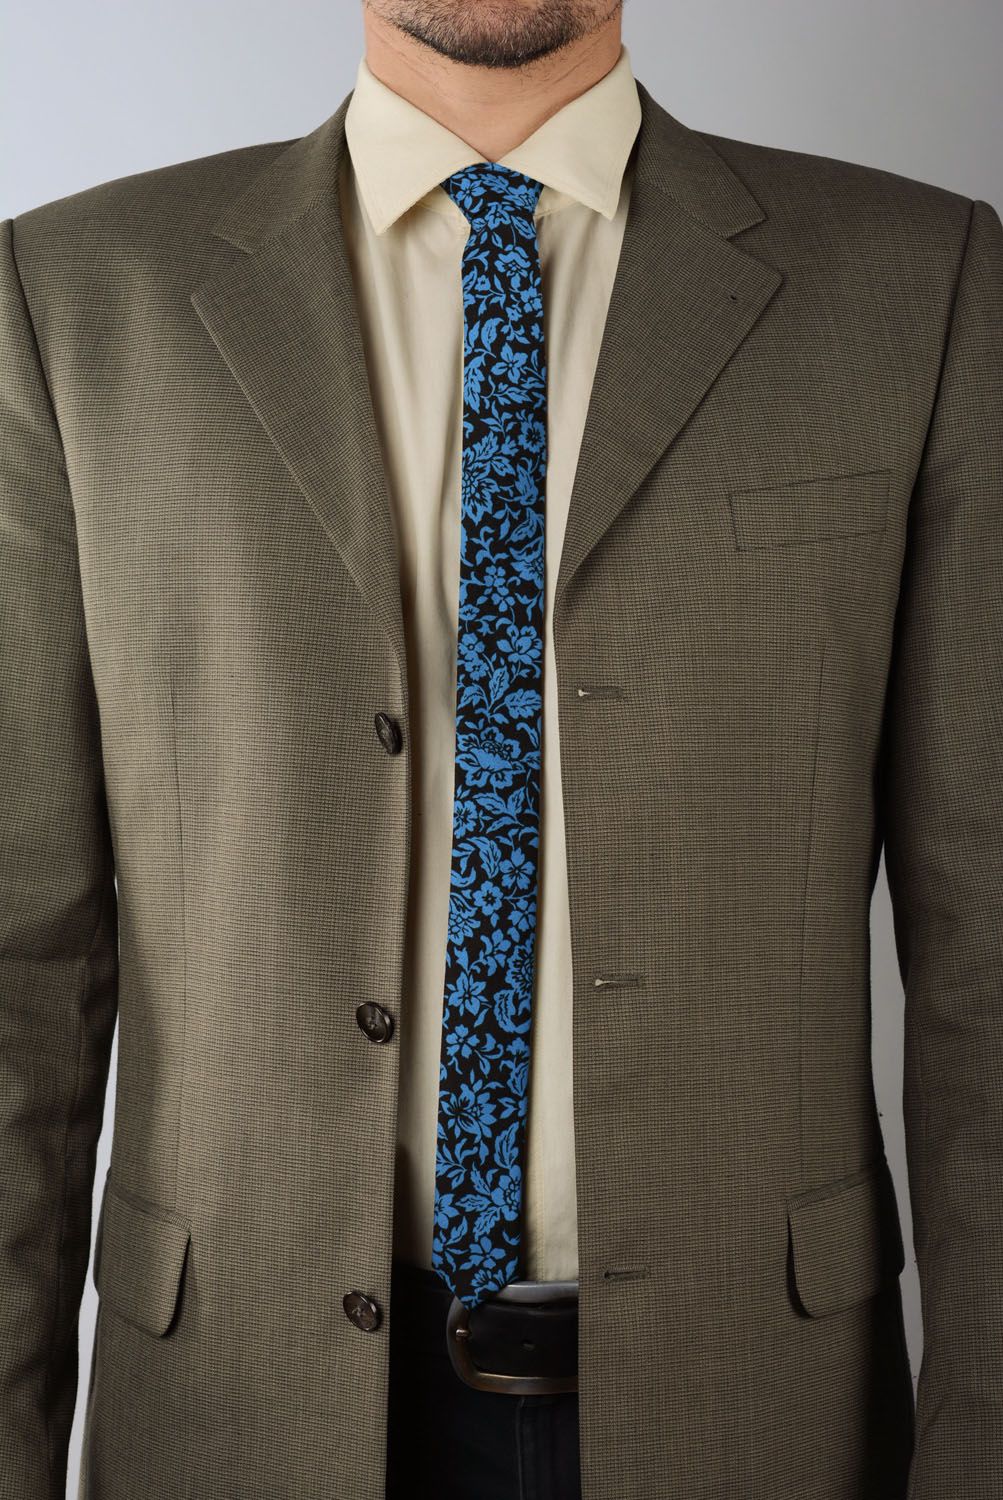 Schwarz-blaue Krawatte foto 1